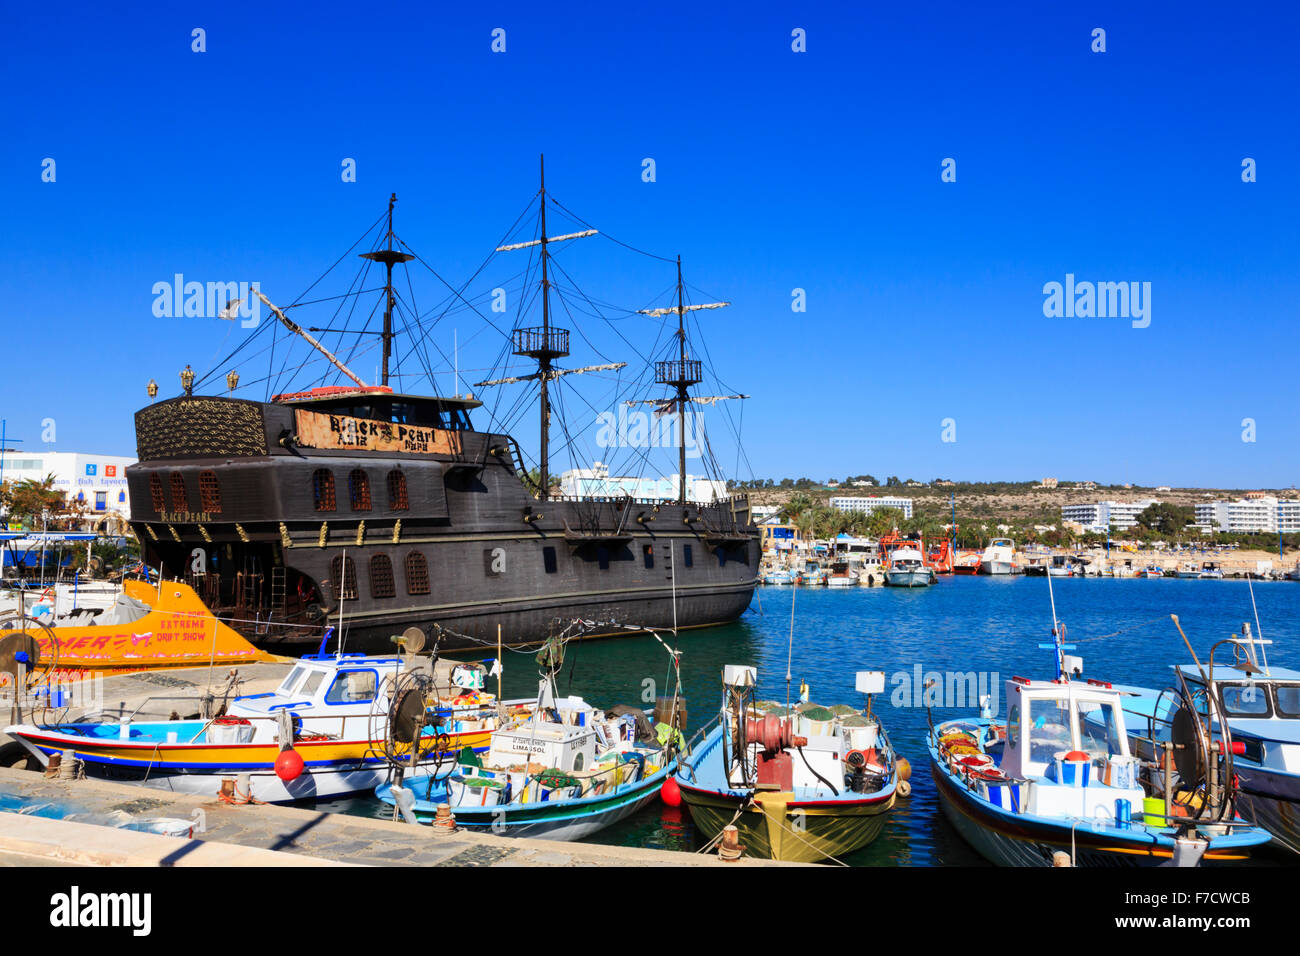 'Black Pearl' bateau de partie en Ayia Napa port avec bateaux de pêche locaux.port d'Ayia Napa, Chypre. Banque D'Images